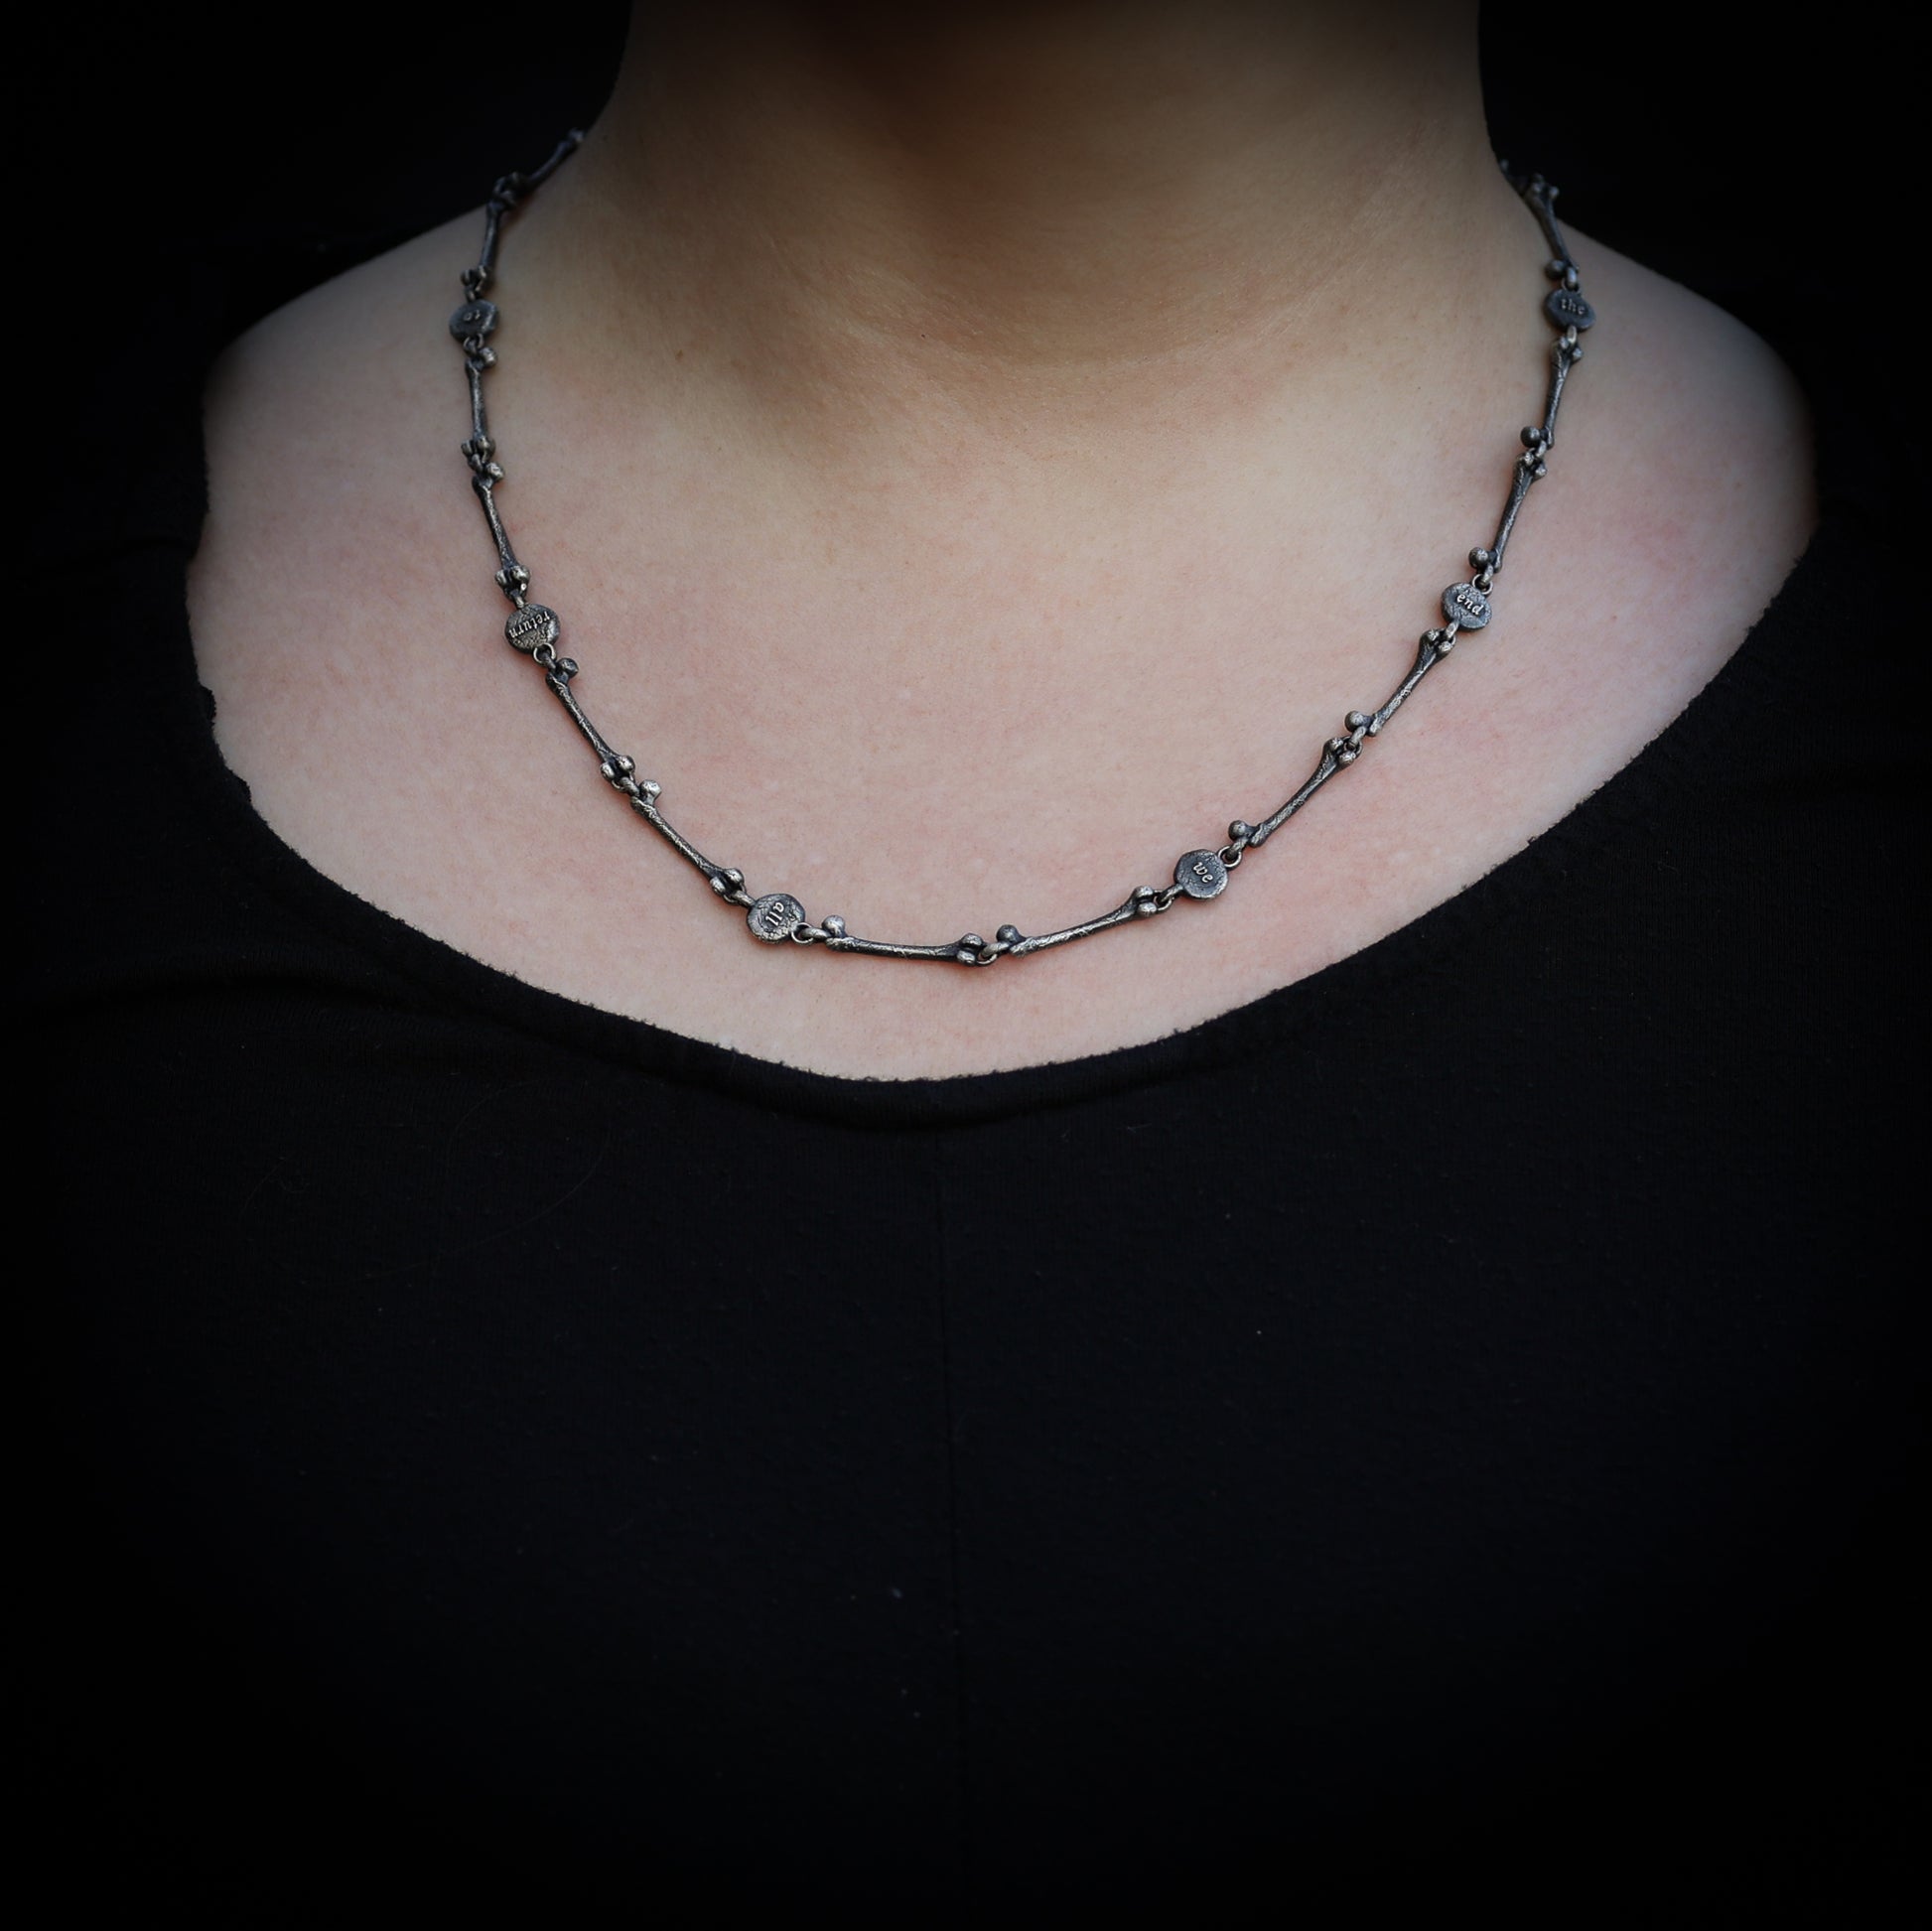 Symbolic necklace, oddities and curiosities.